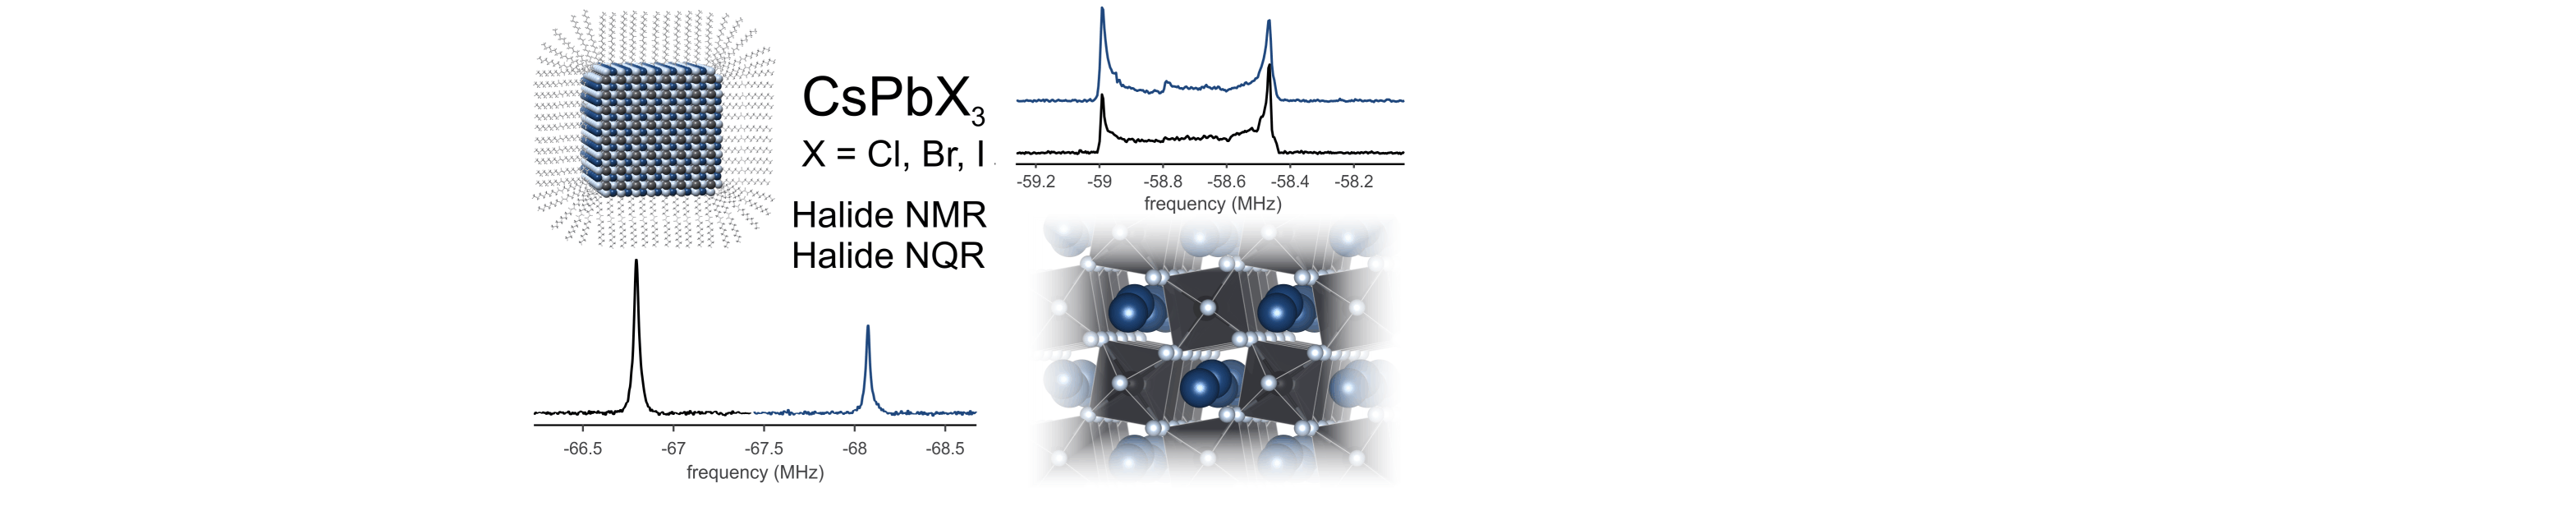 Bulk and Nanocrystalline Cesium Lead-Halide Perovskites as Seen by Halide Magnetic Resonance